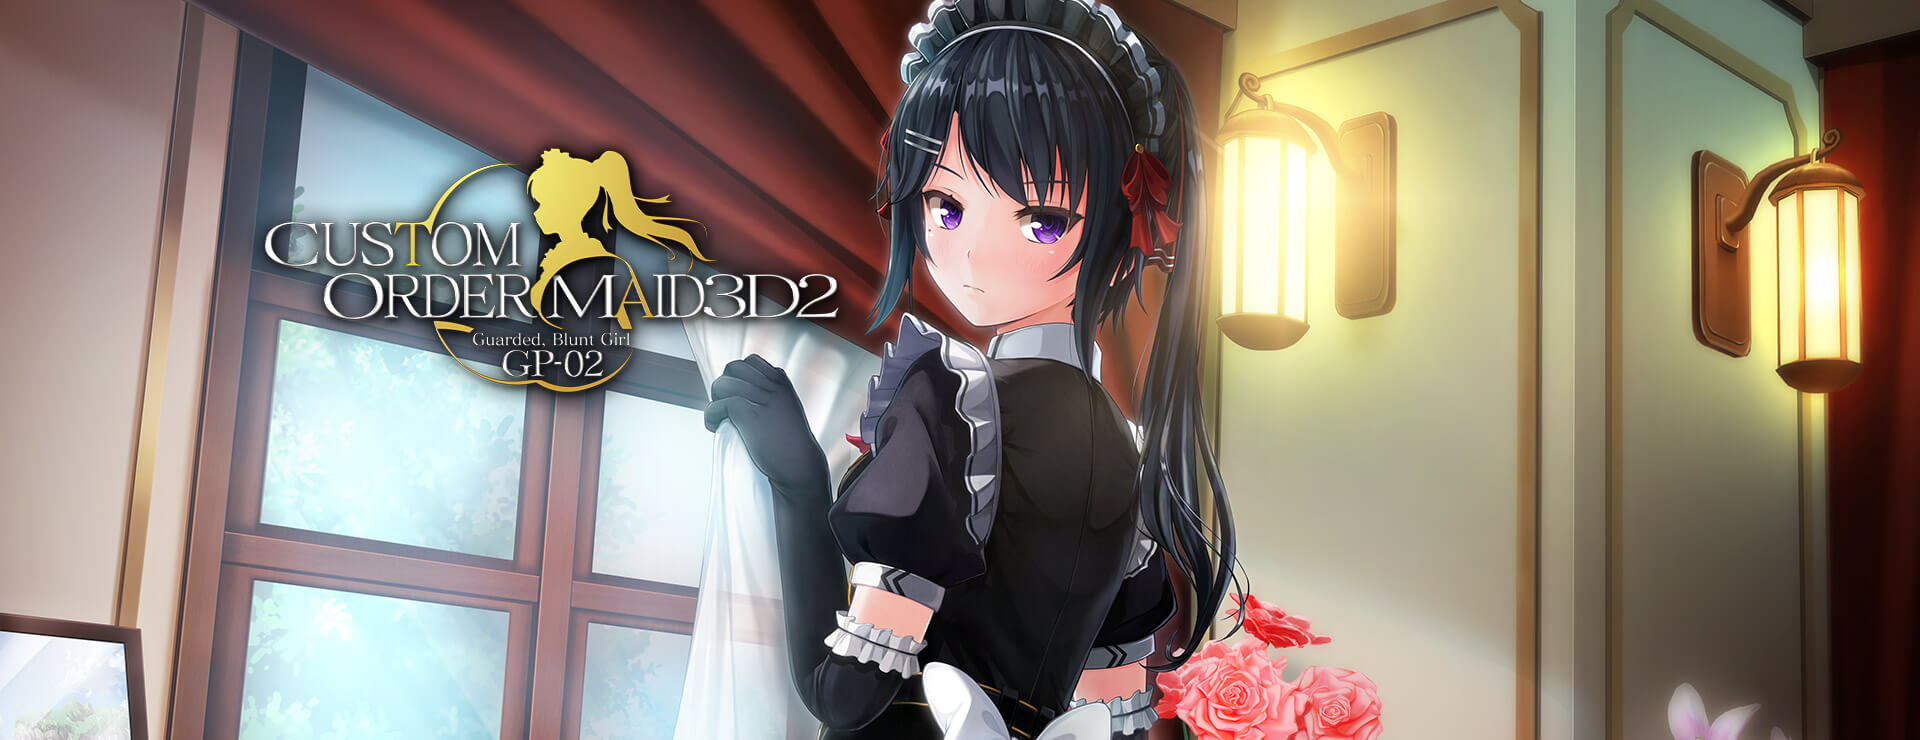 Custom Order Maid 3D2: Guarded, Blunt Girl GP02 DLC - シミュレーション ゲーム